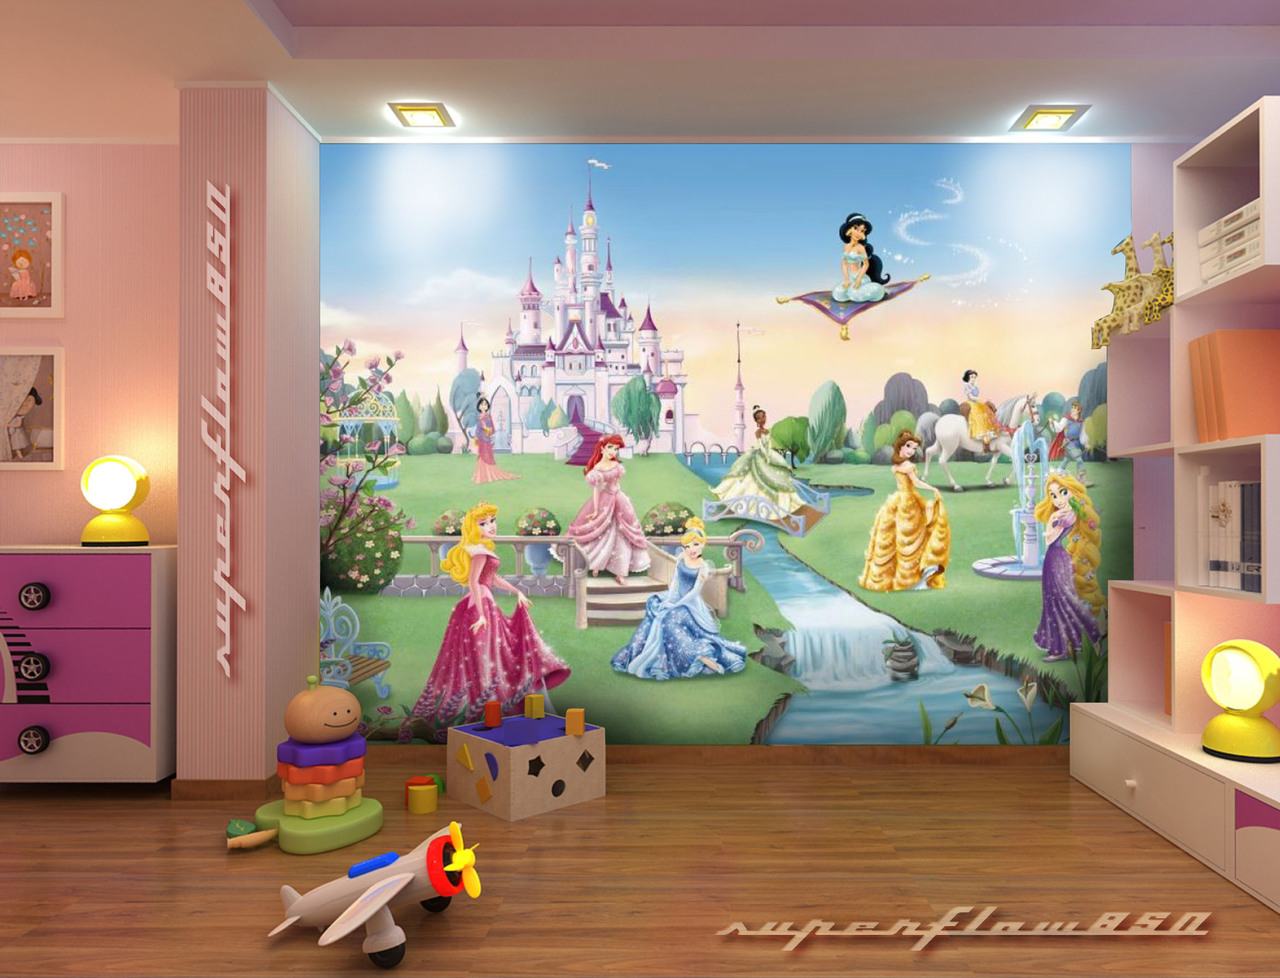 Castle Disney Wallpaper Mural Kids HD Pictures